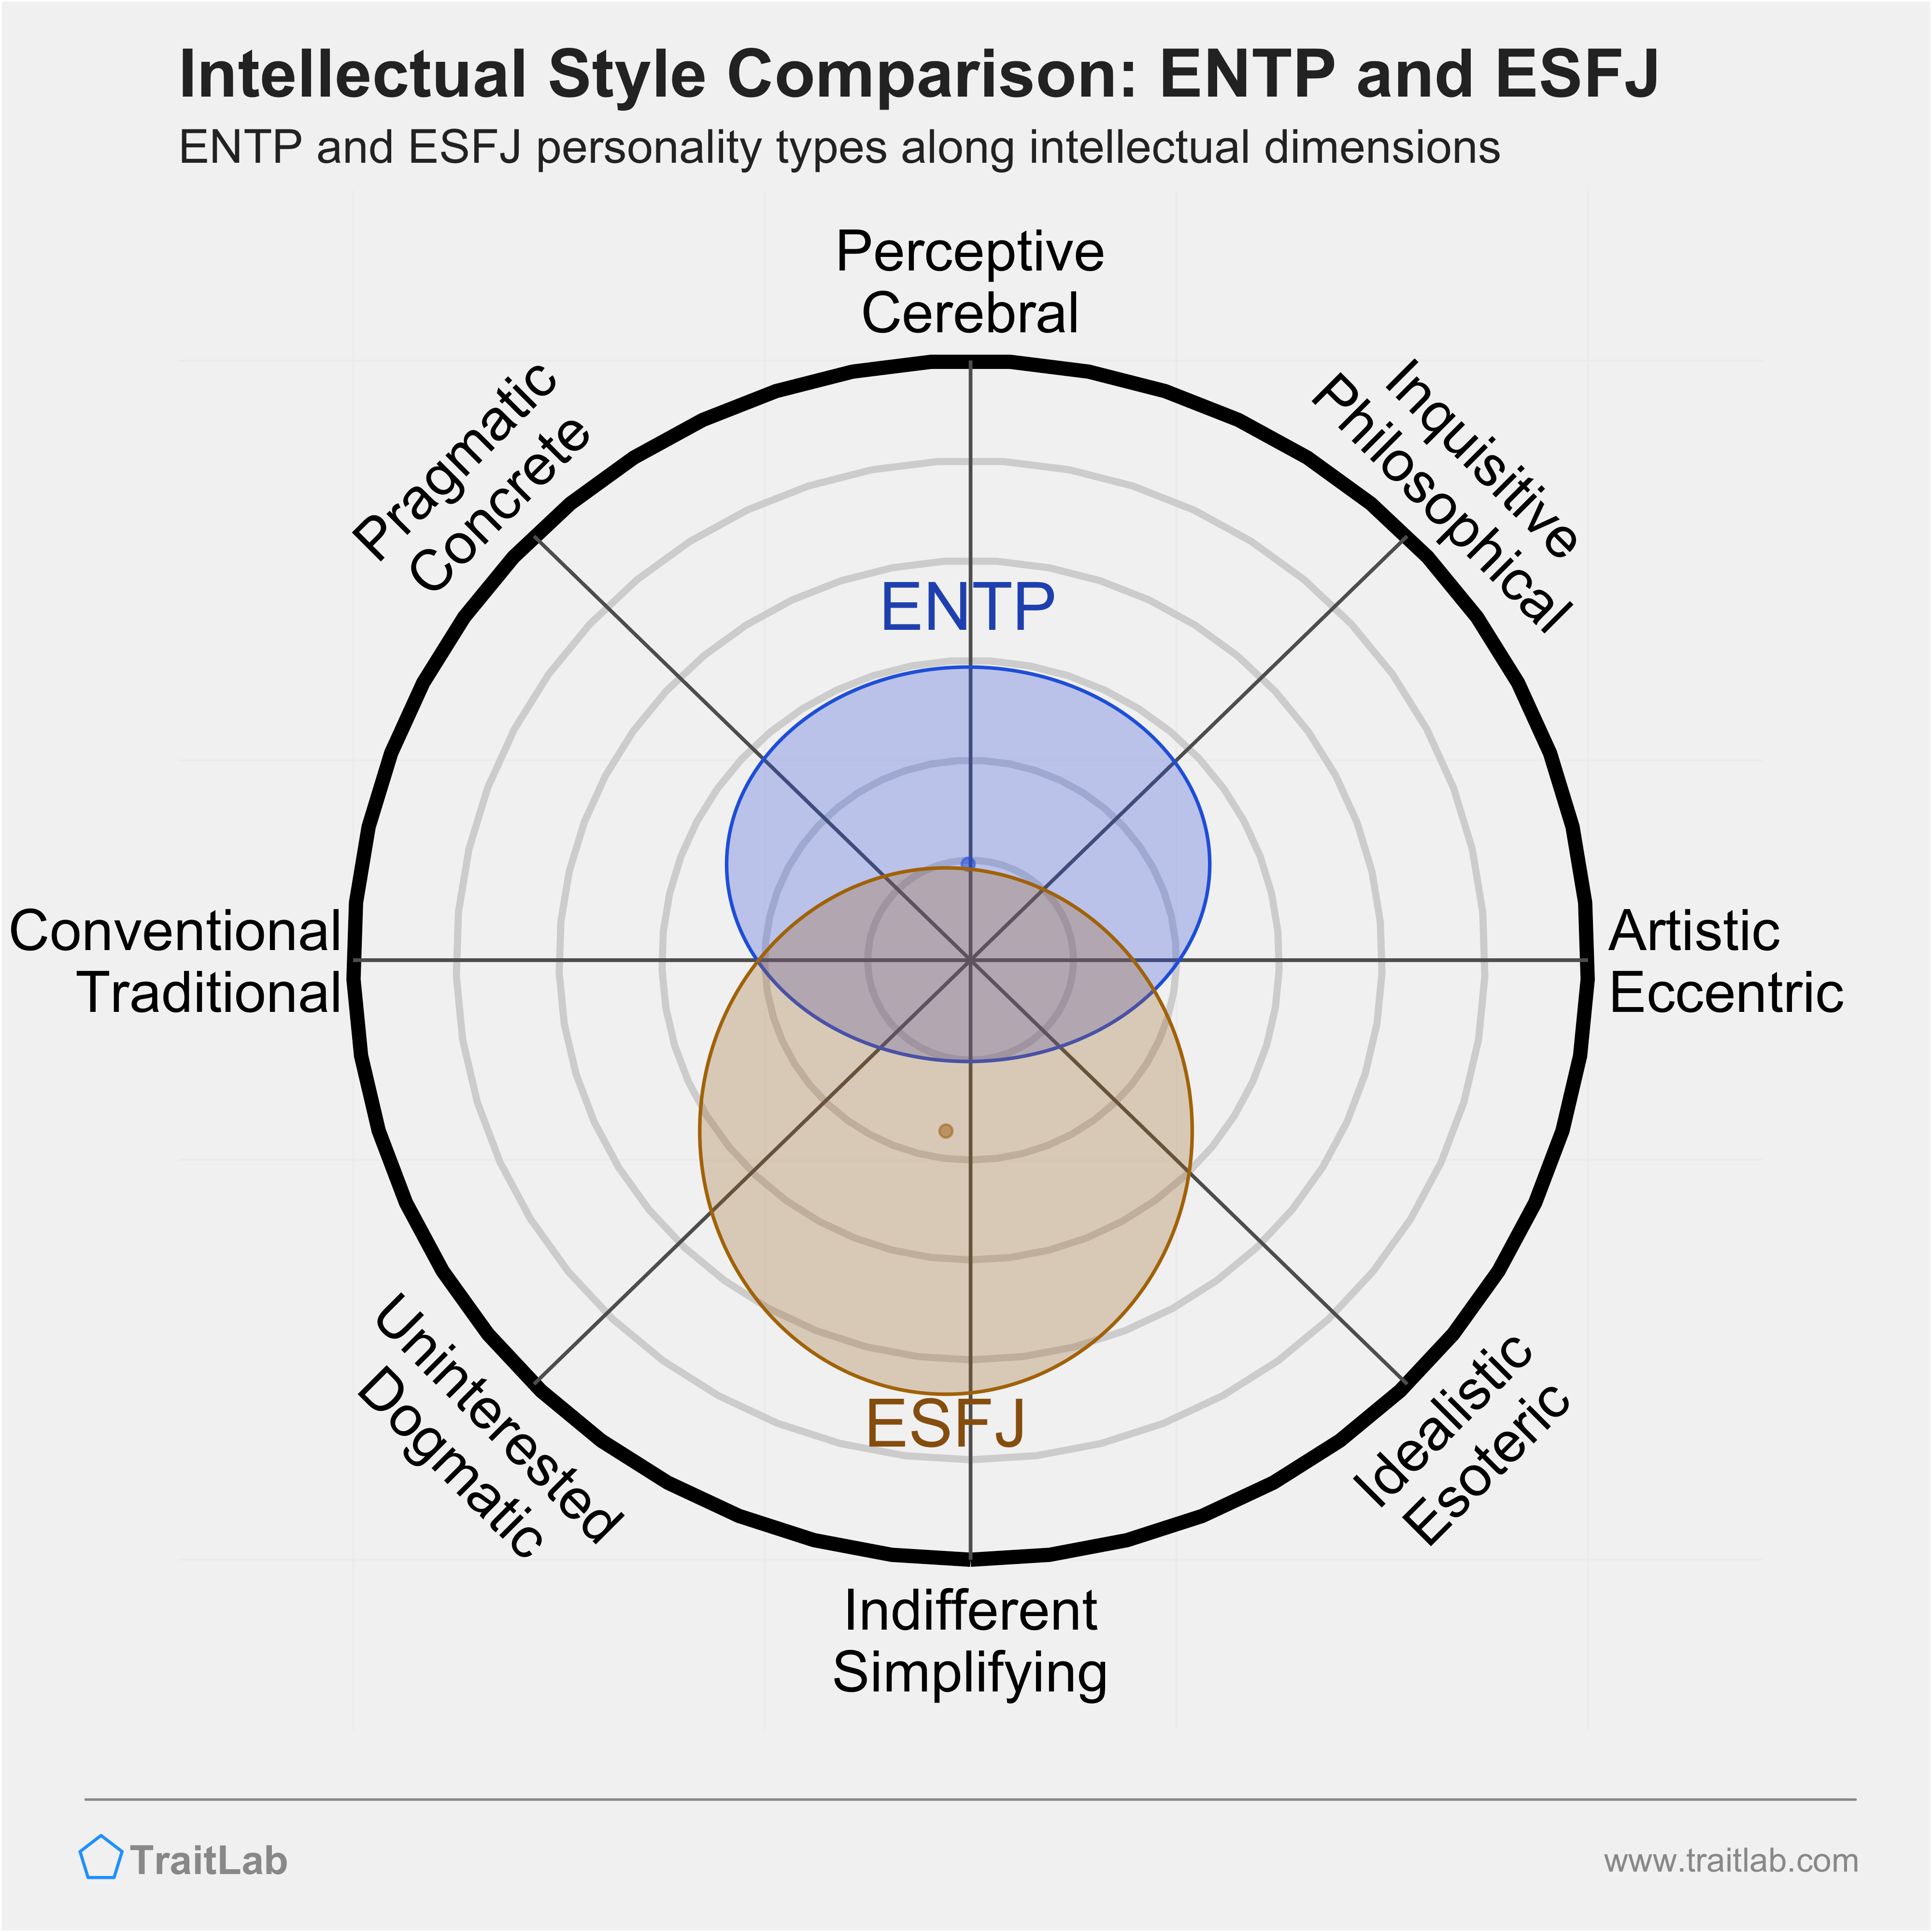 ENTP and ESFJ comparison across intellectual dimensions